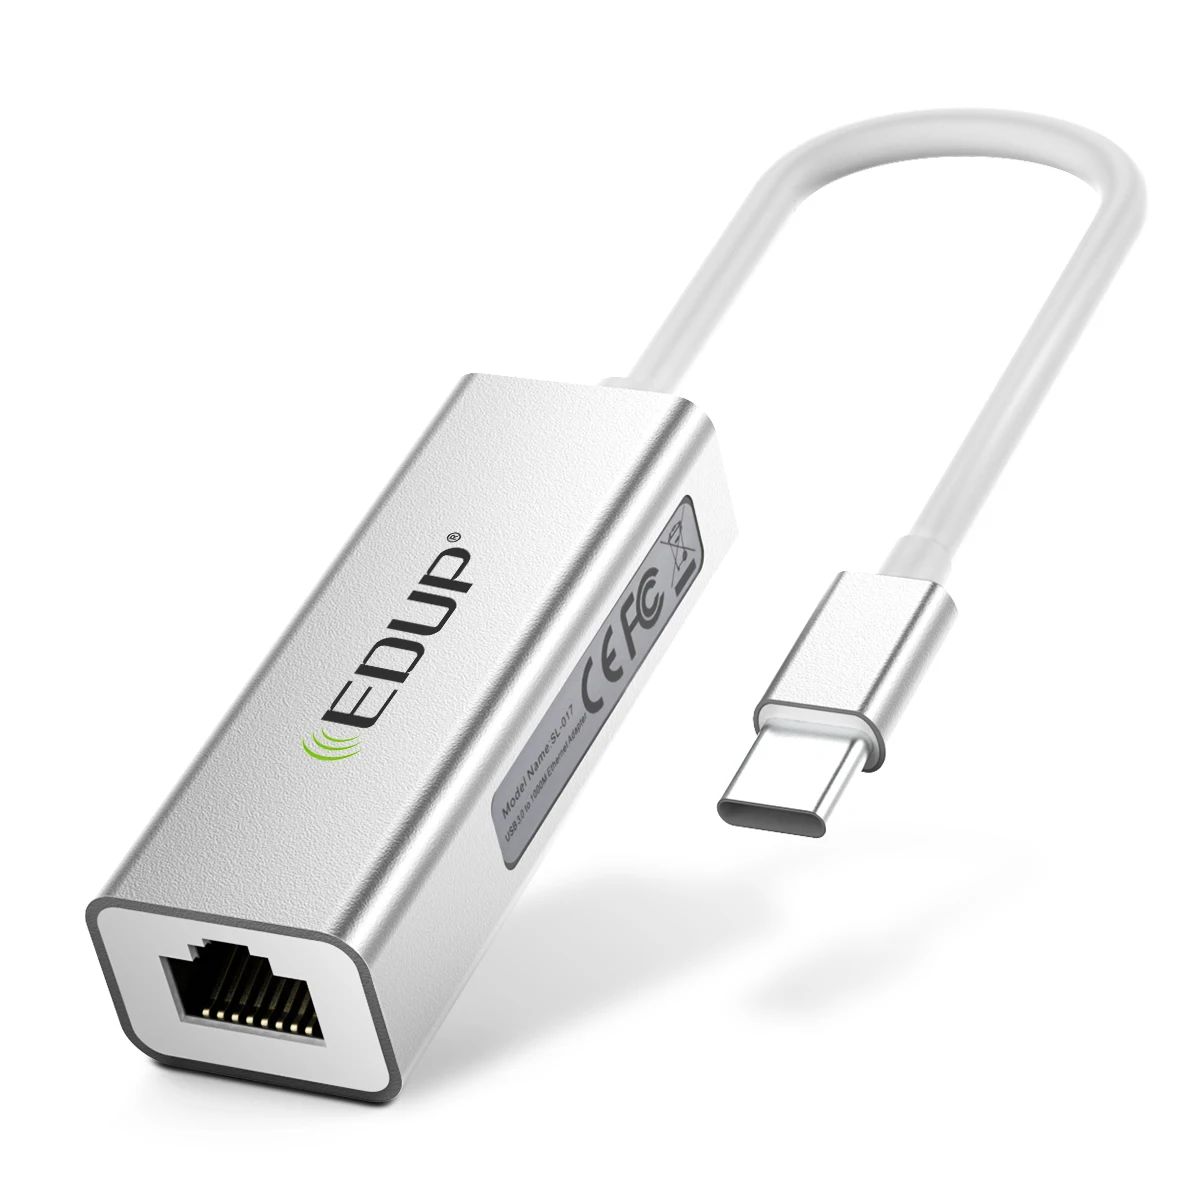 

EDUP USB 3.0 to LAN 1000Mbps Ethernet RJ45 Network Adapter for Windows 10/8/7/Vista/XP, White or black